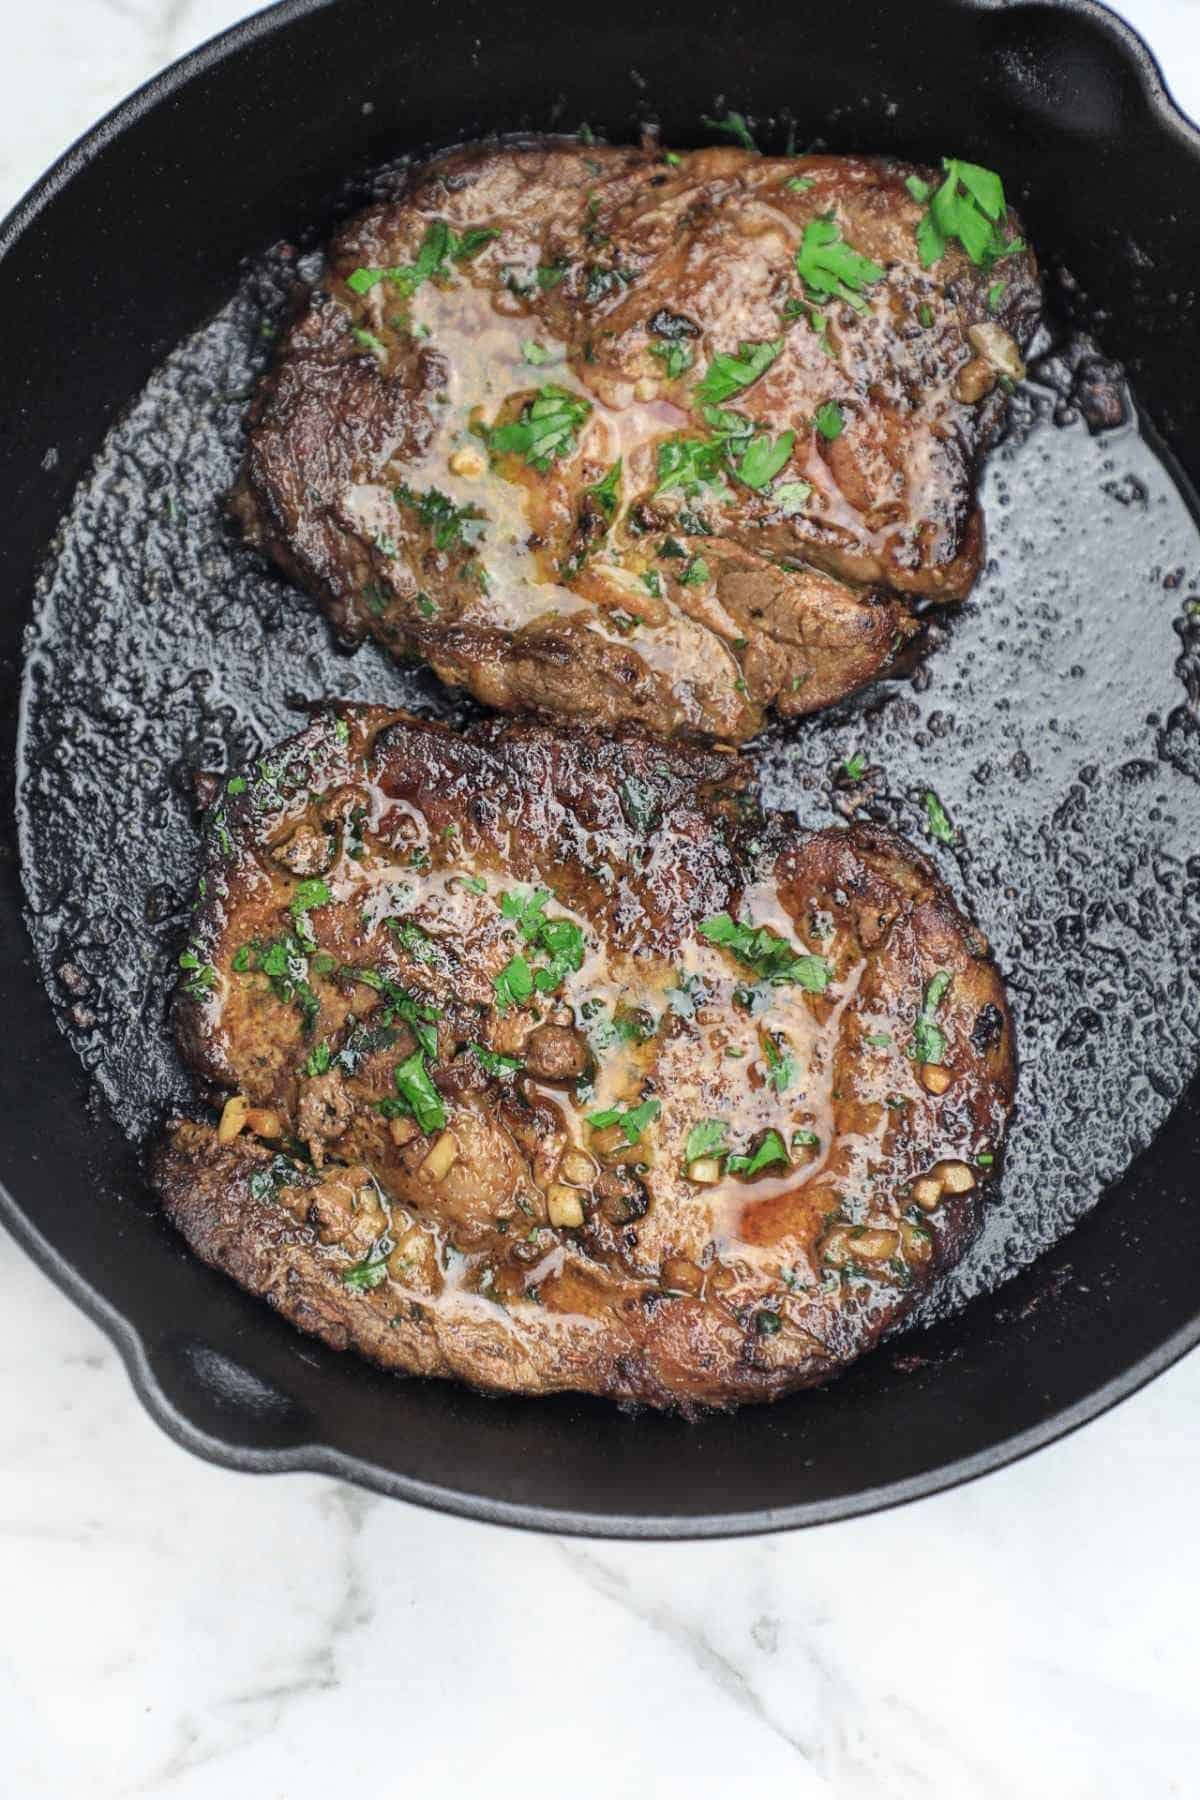 two pan fried steak in a skillet.